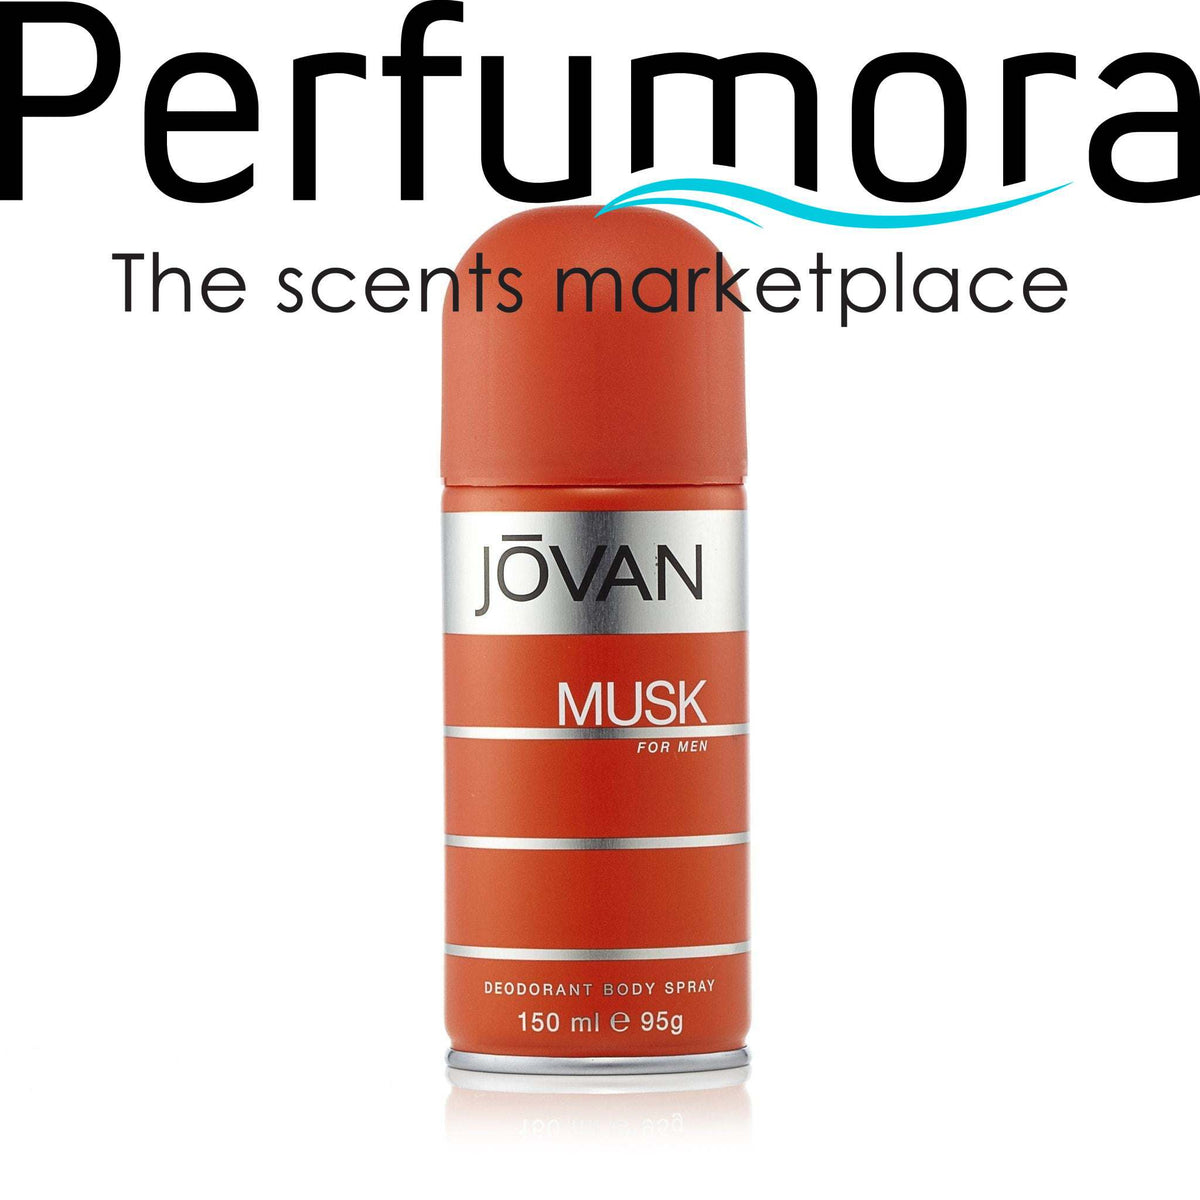 Jovan Musk Deodorant Body Spray for Men by Coty 5.0 oz.